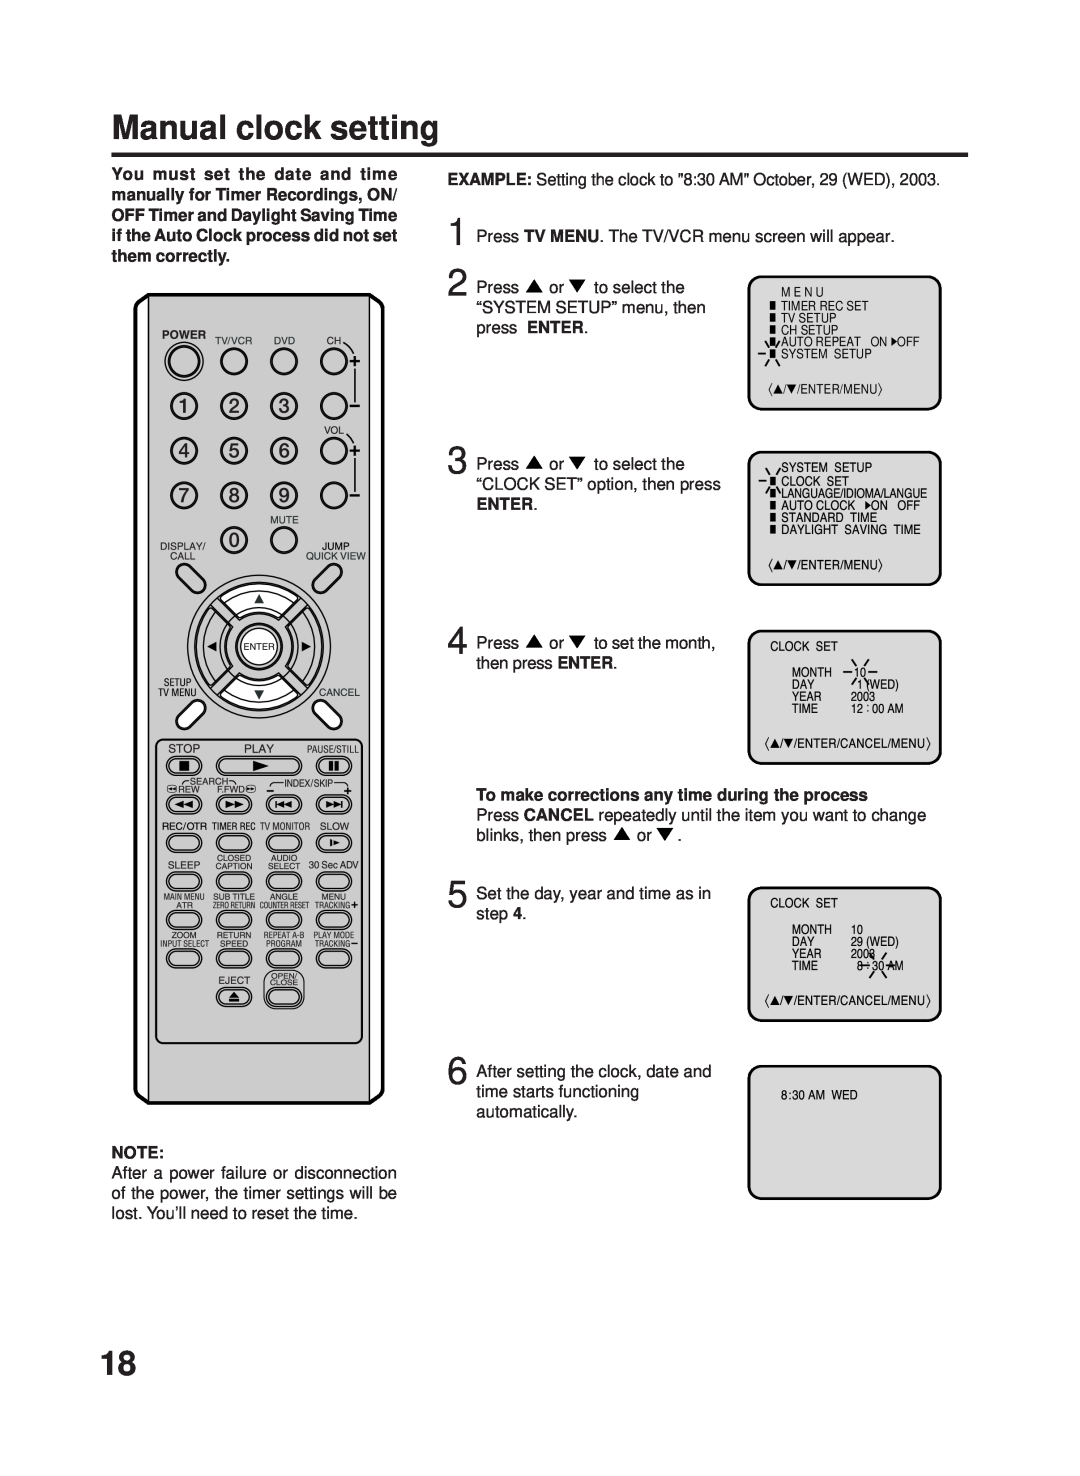 RCA 27F500TDV manual Manual clock setting, Enter, To make corrections any time duringthe process 